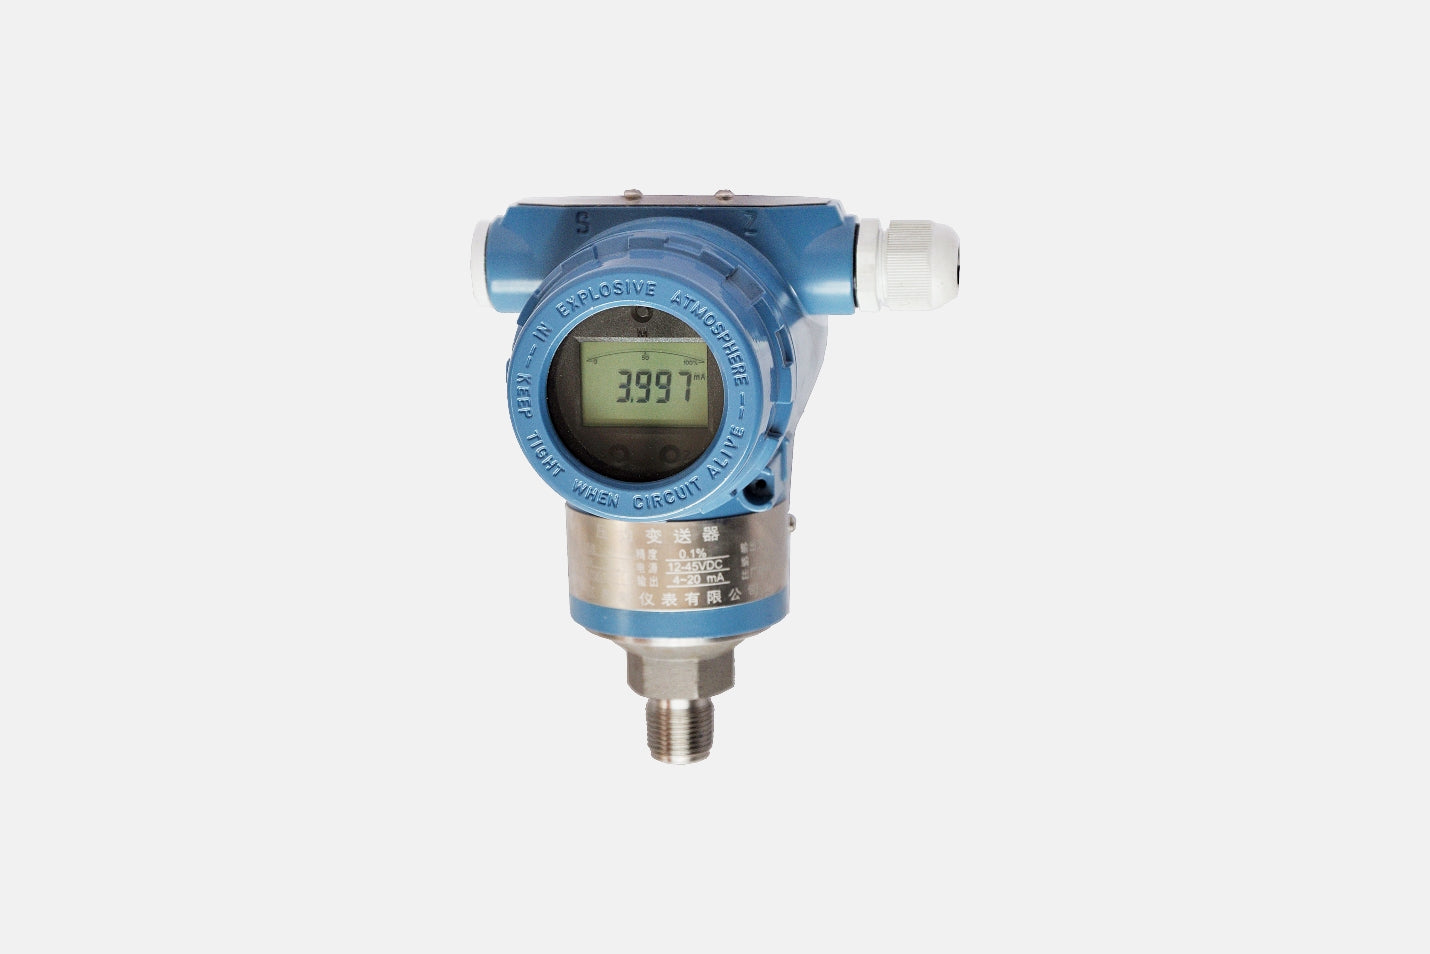 Aoxin YSB3051 Direct Pressure transmitter price